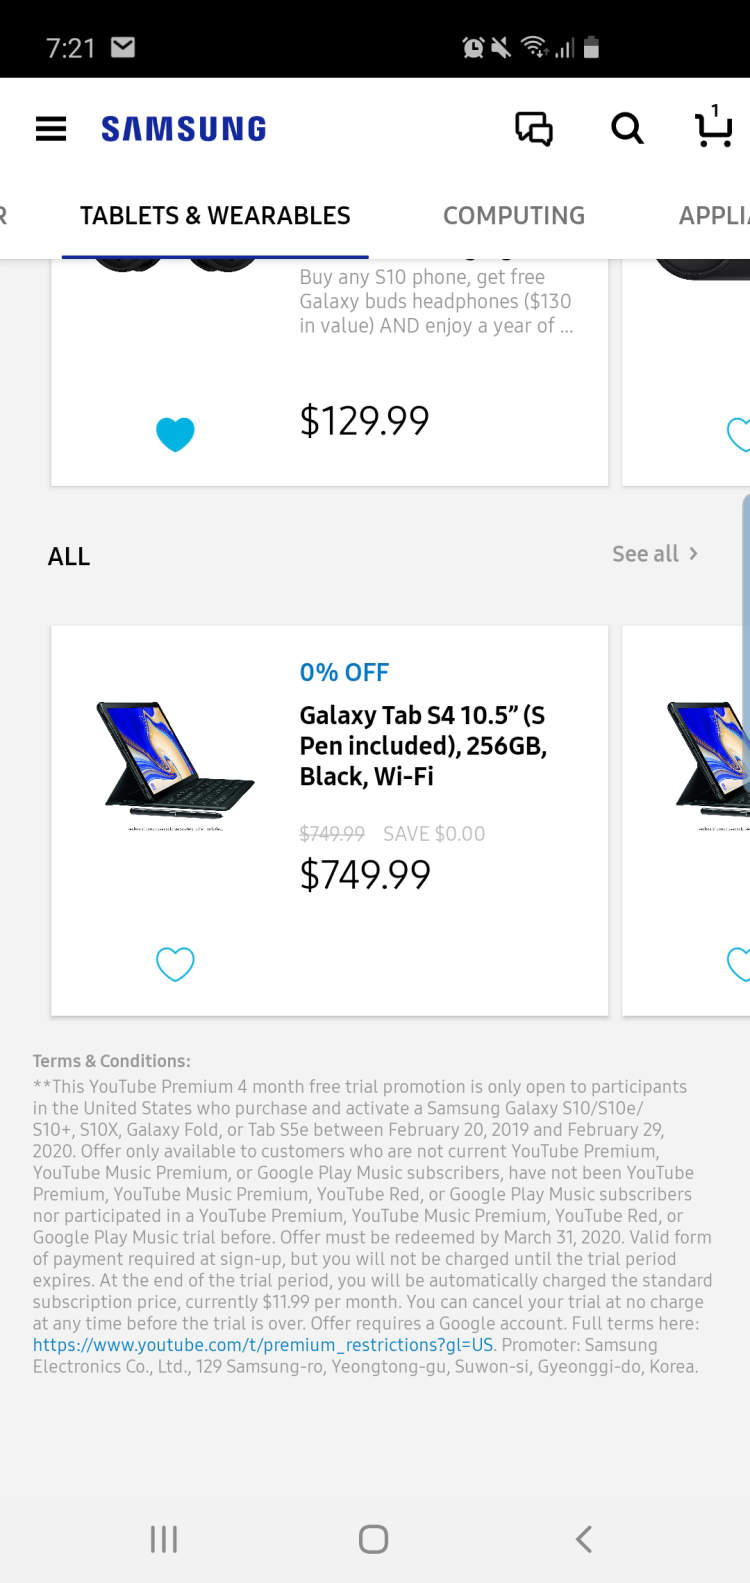 Amazing Laptop Deals on Reddit: Don't Miss Out!